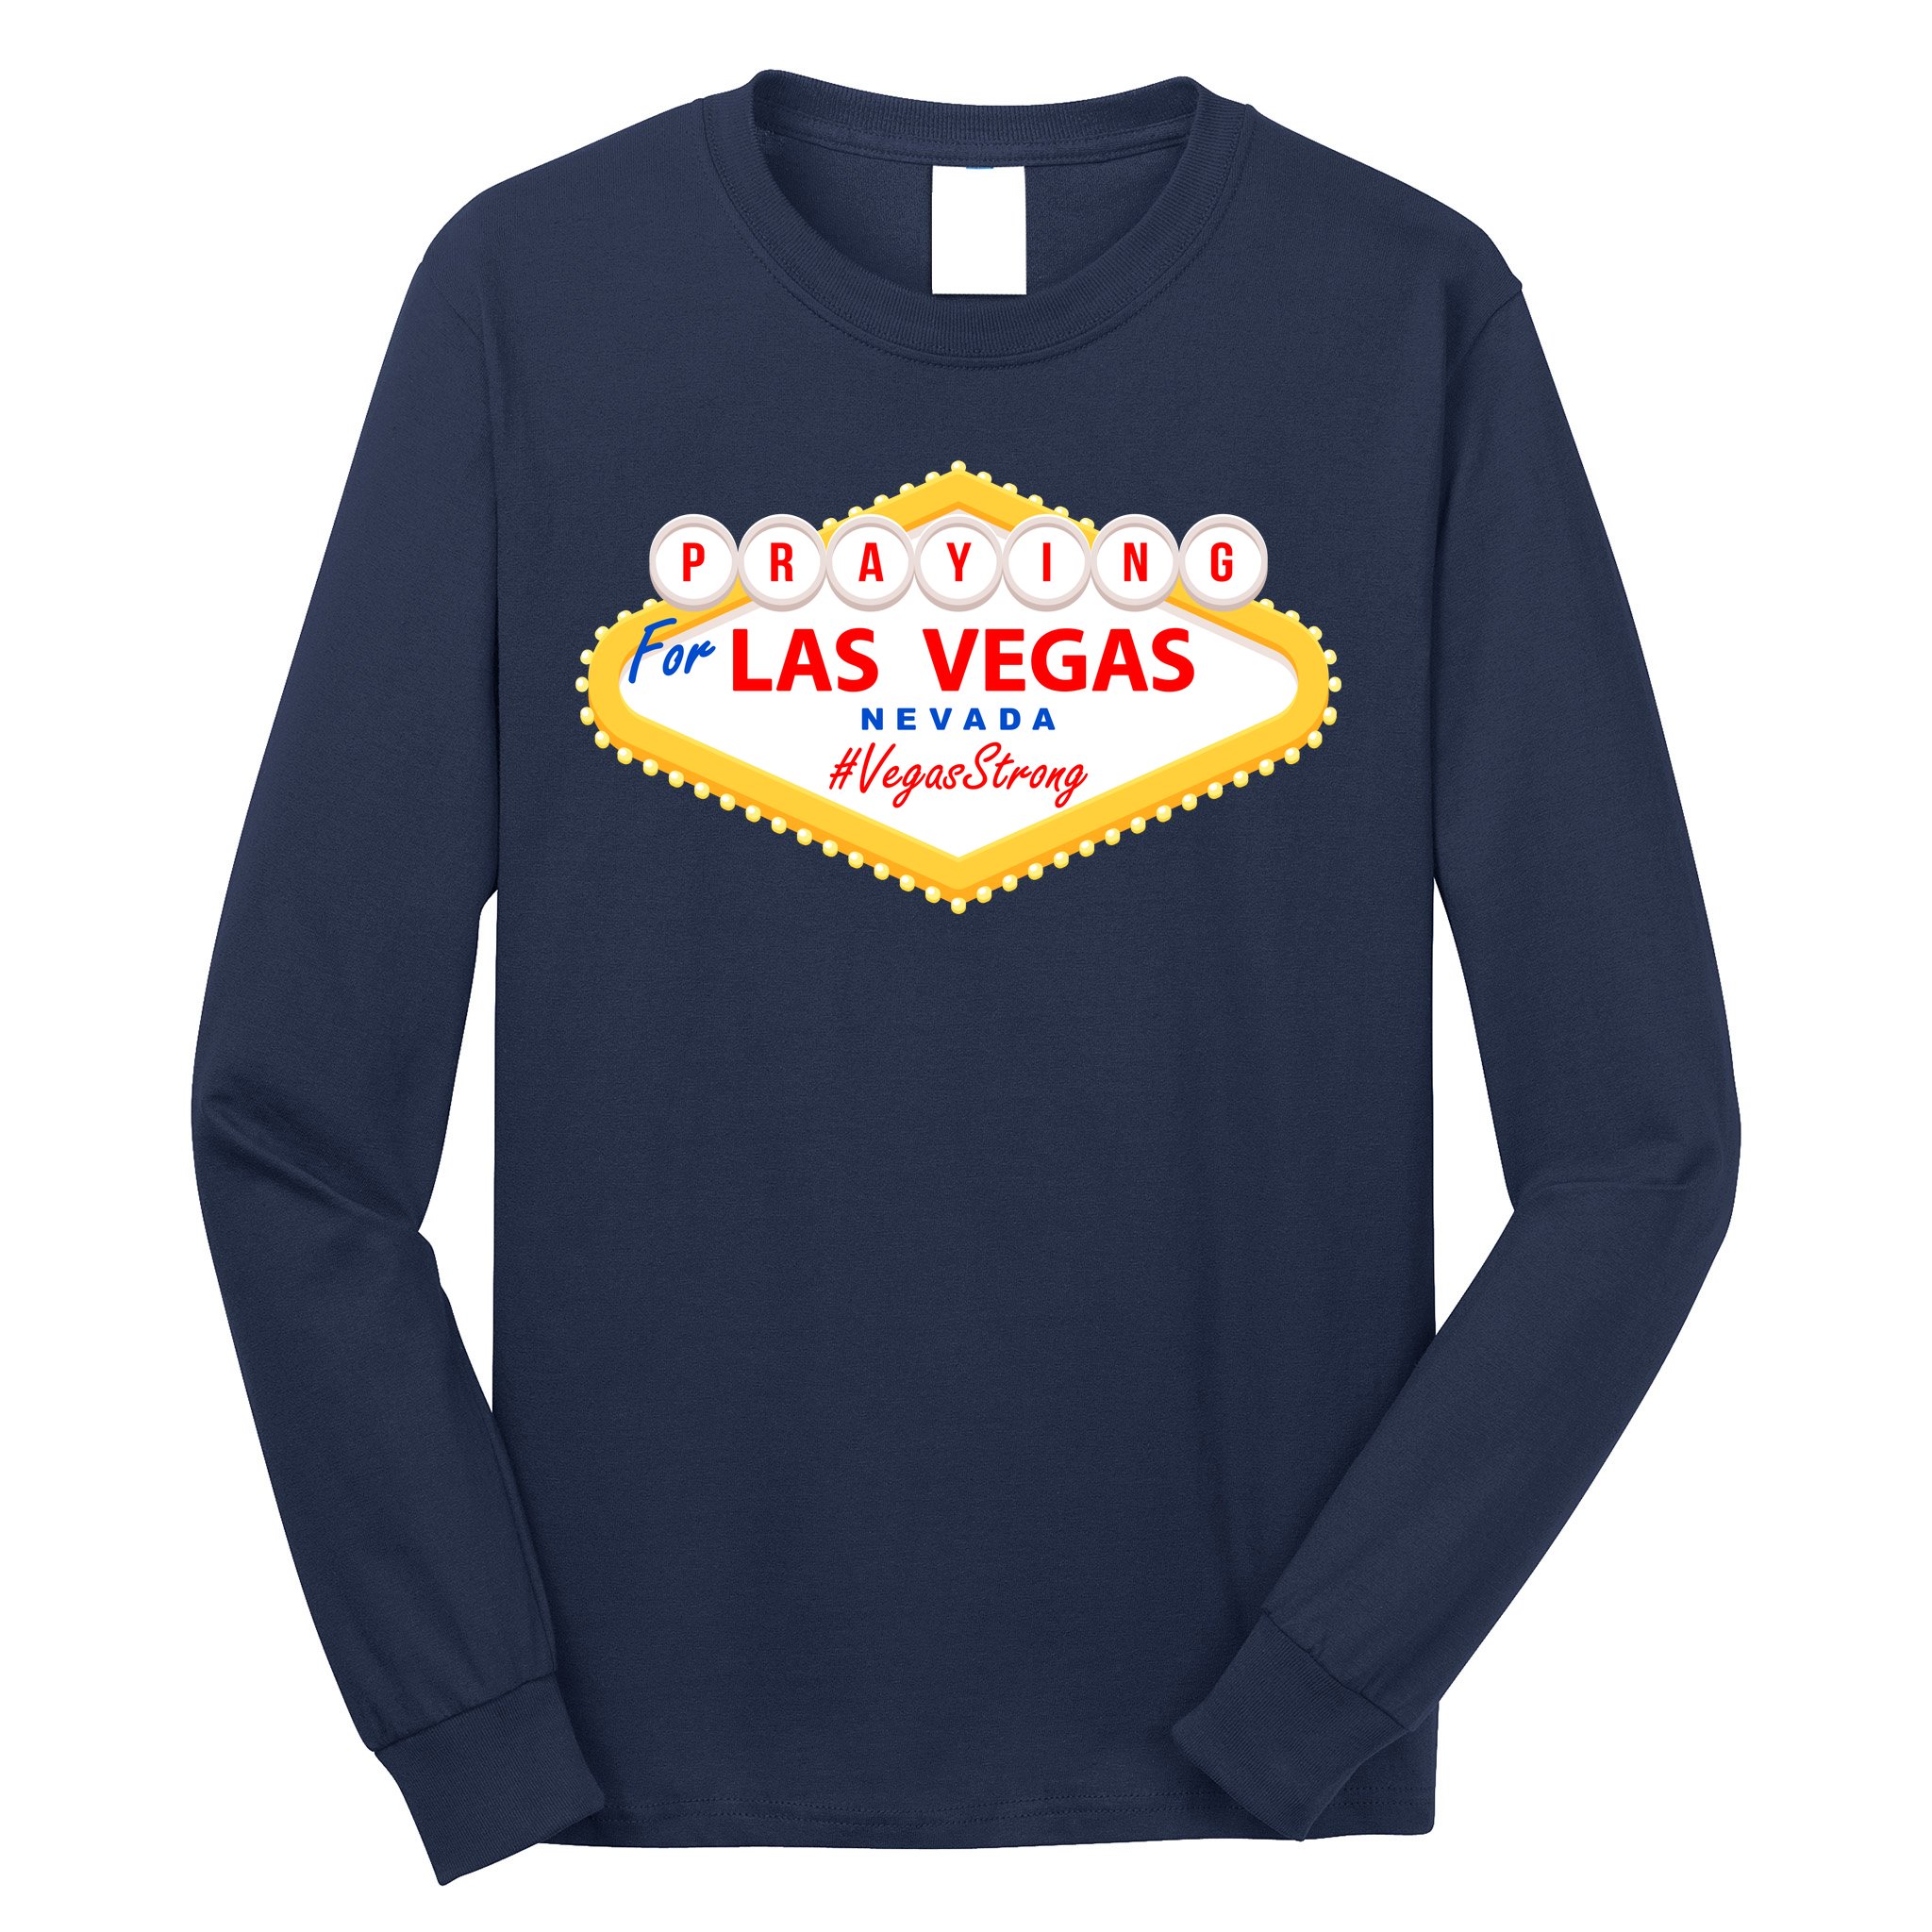 I Love Las Vegas Shirt , I Heart Las Vegas T-shirt All Sizes S-5XL Nevada  Tee